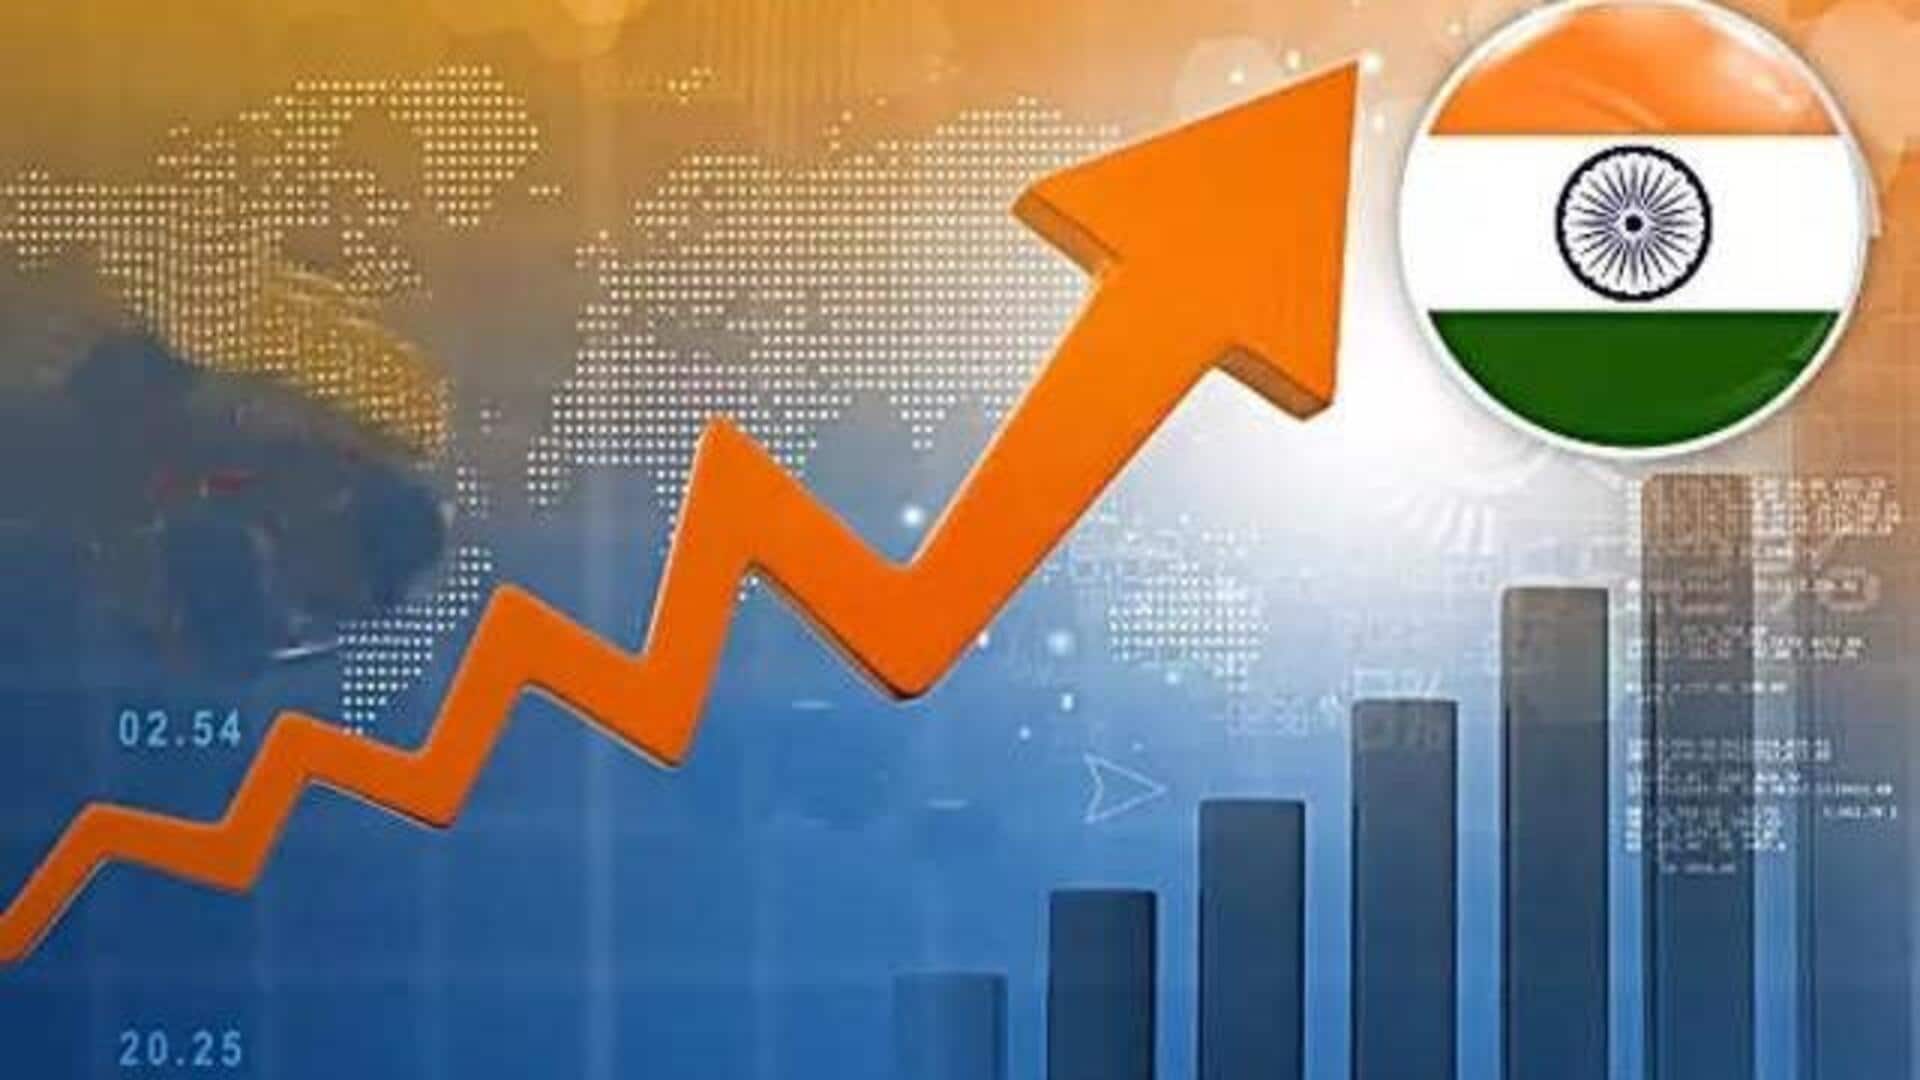 India's economy to grow above 6% this decade: Goldman Sachs